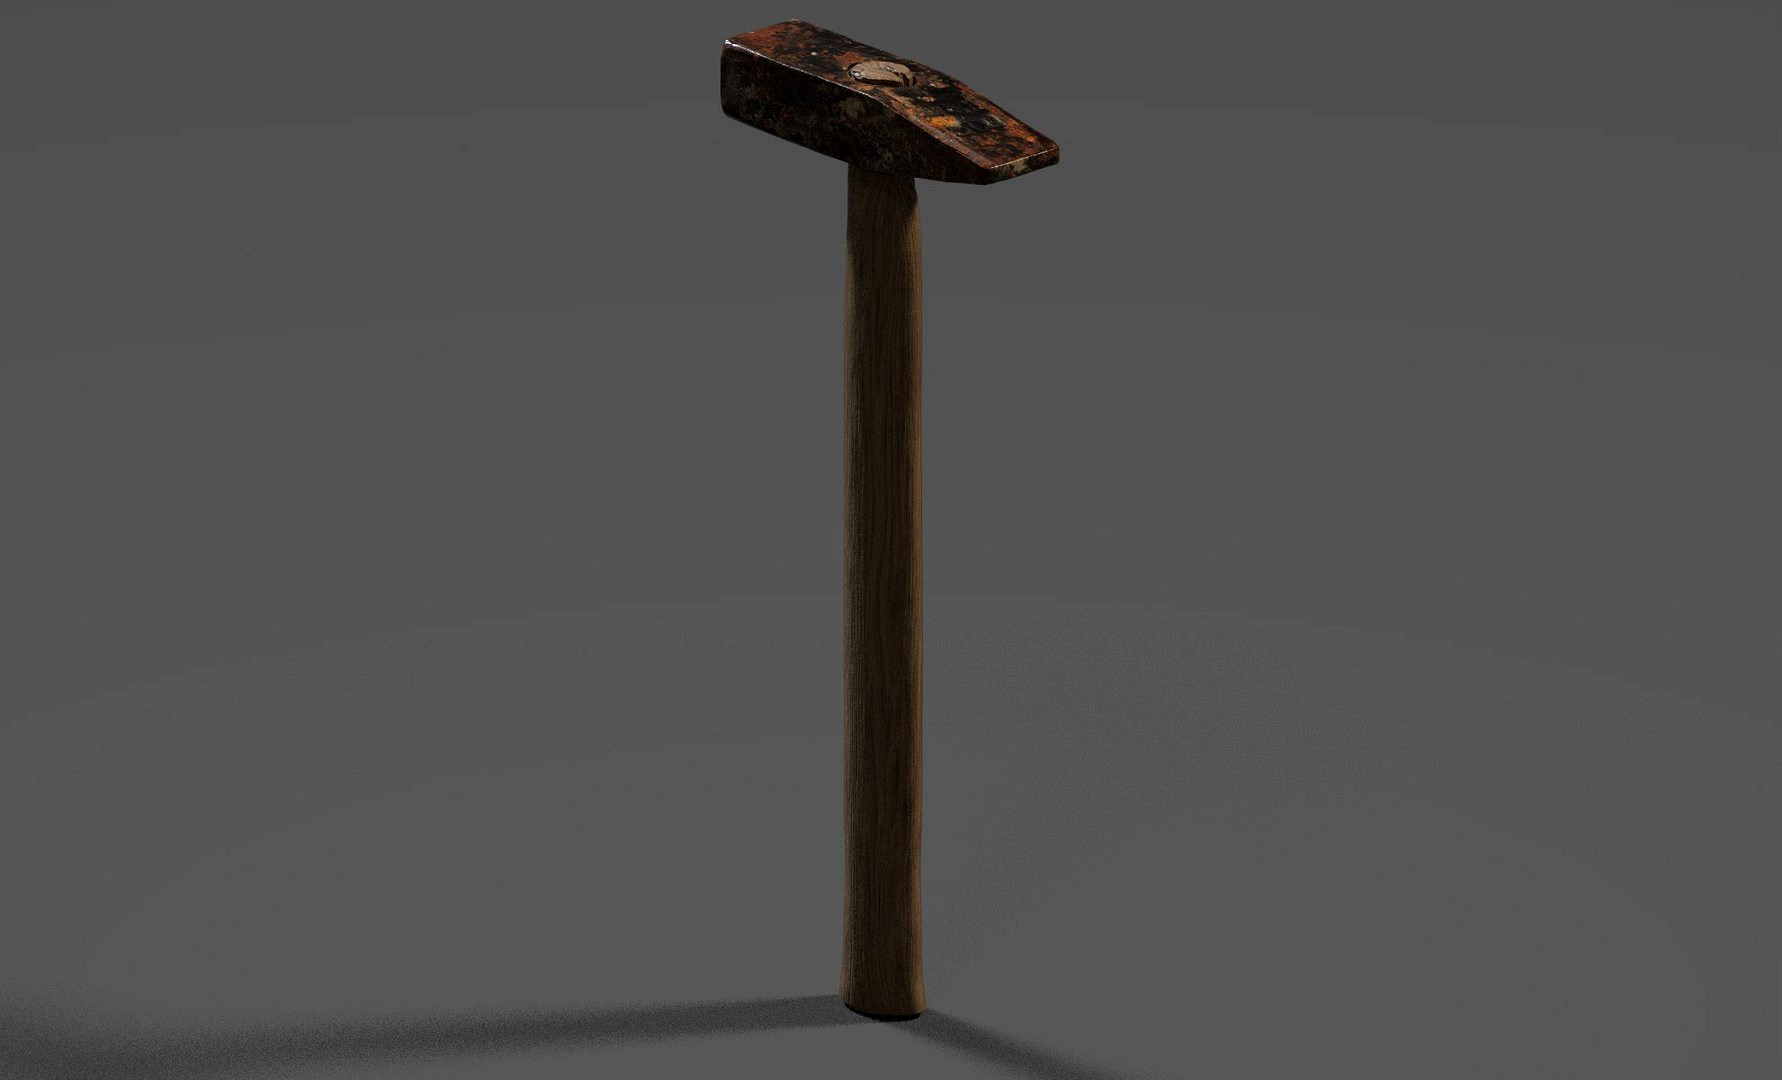 Rusty hammer